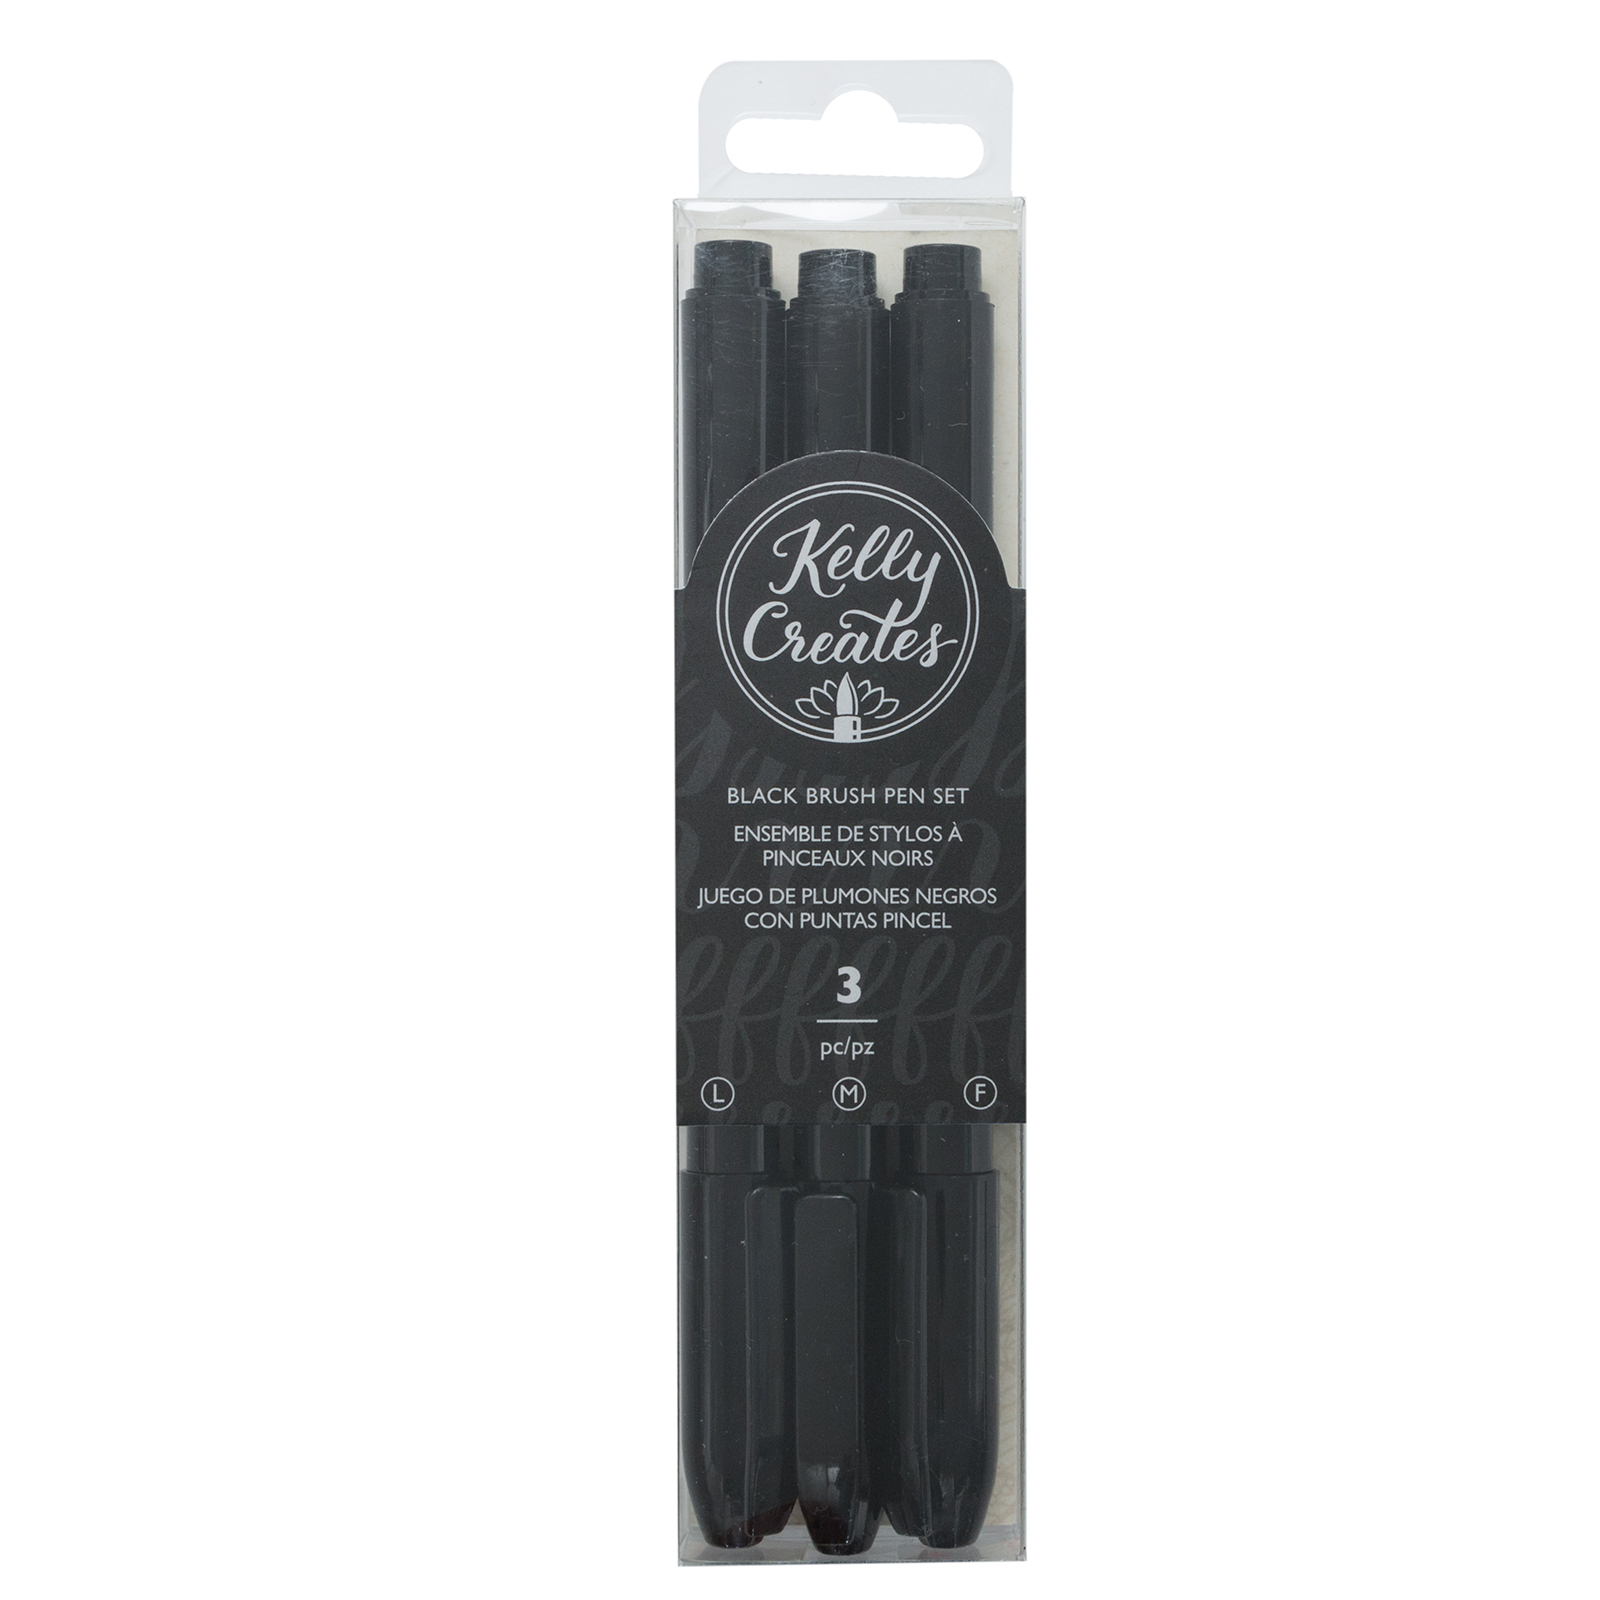 Kelly Creates Black Brush Pens Set by American Crafts